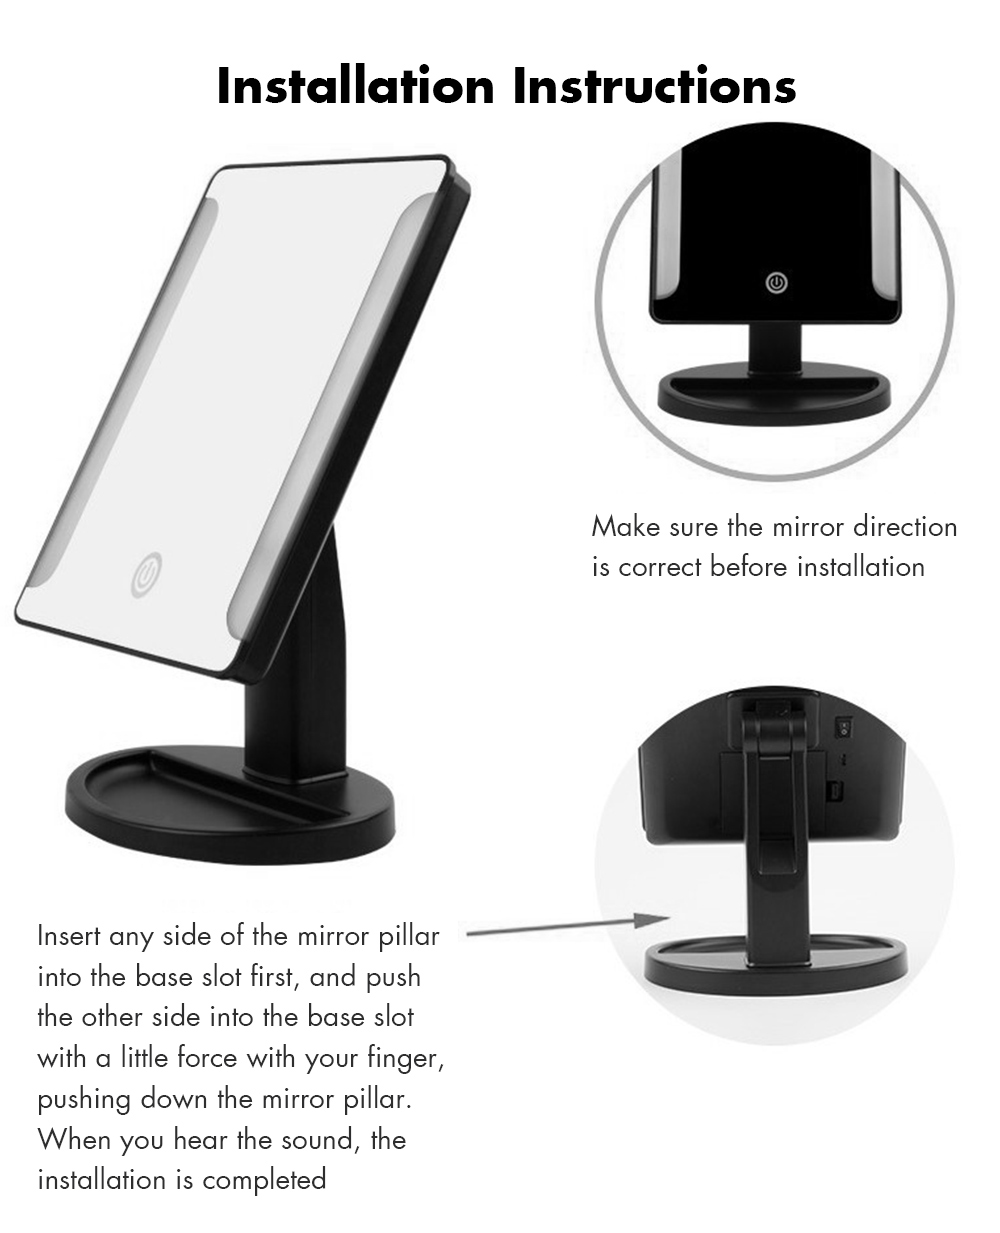 Rotation Intelligent LED Light Makeup Mirror